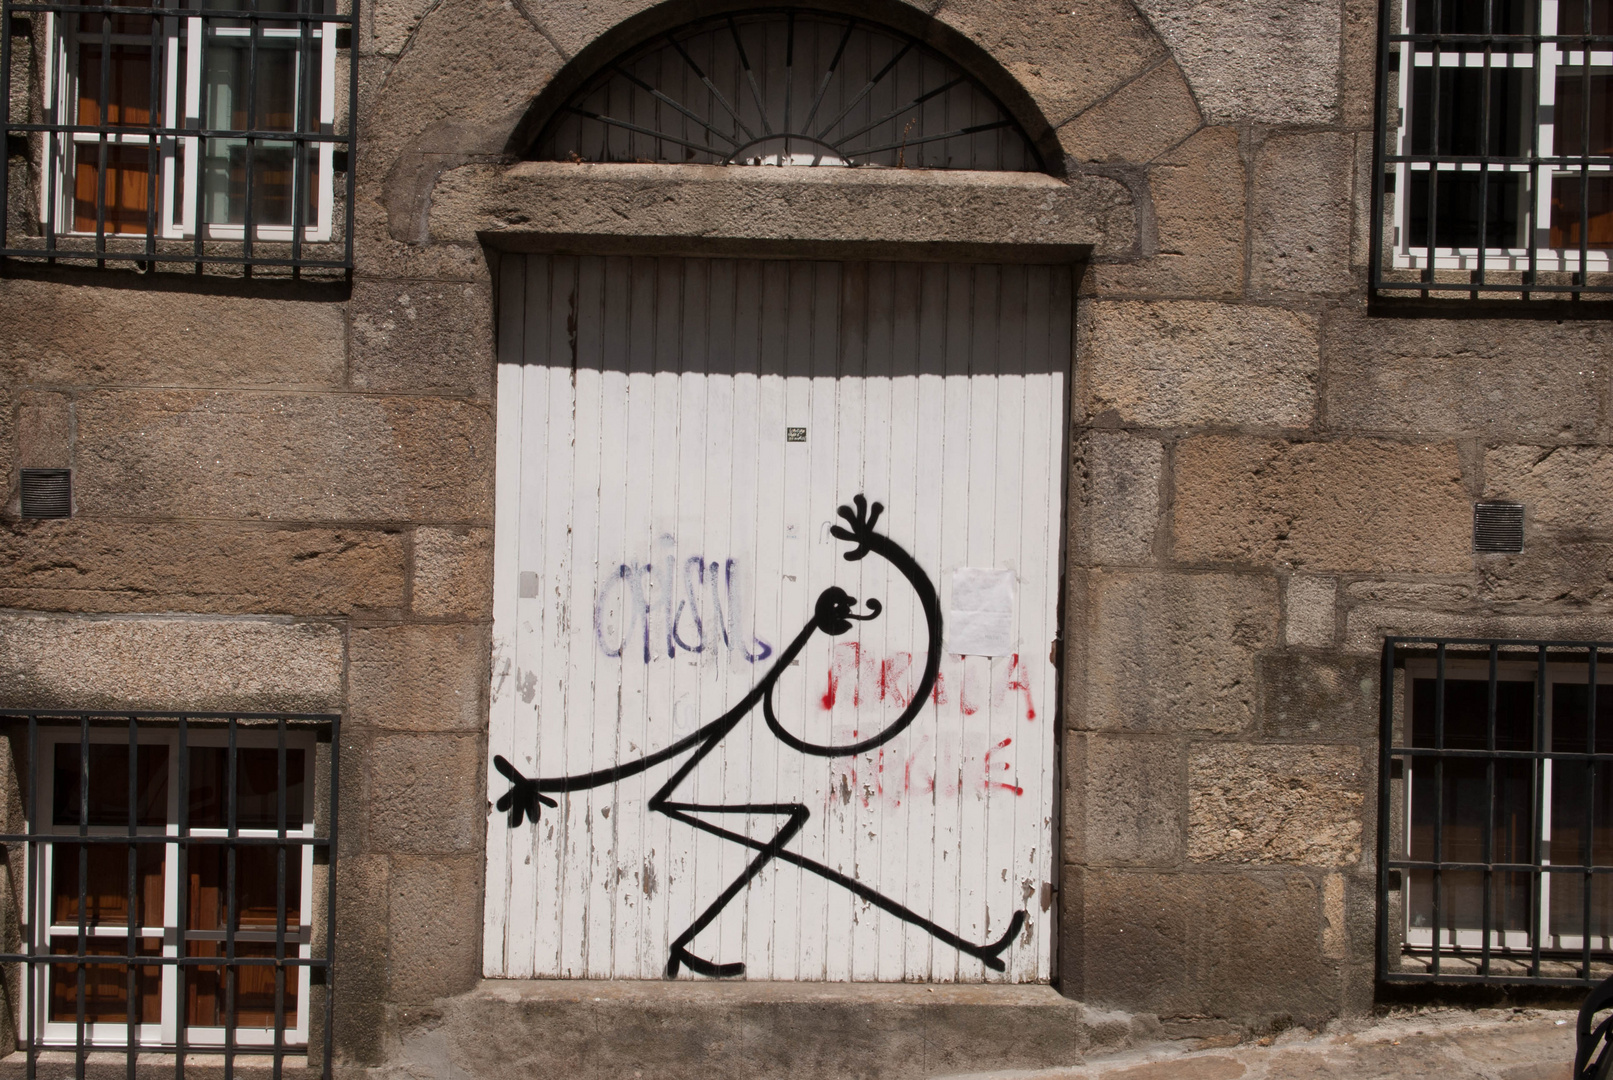 Santiago de Compostela Graffiti